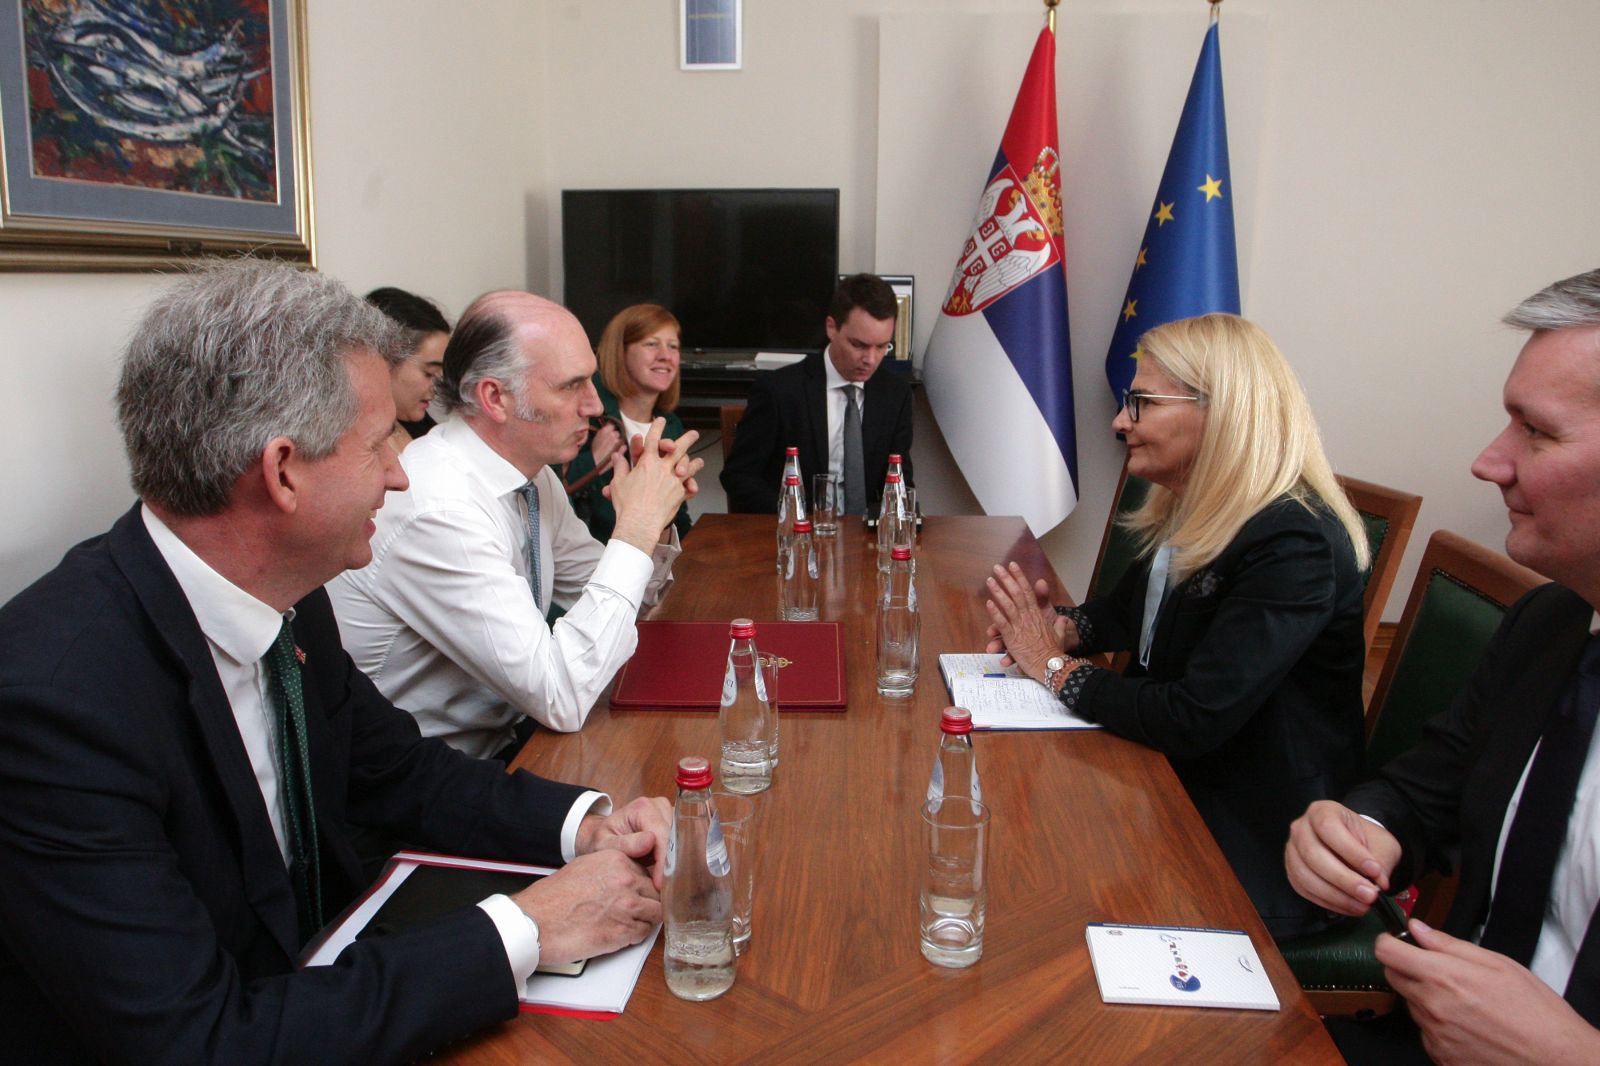 Miščević introduced Docherty to Serbia’s progress in the European integration process